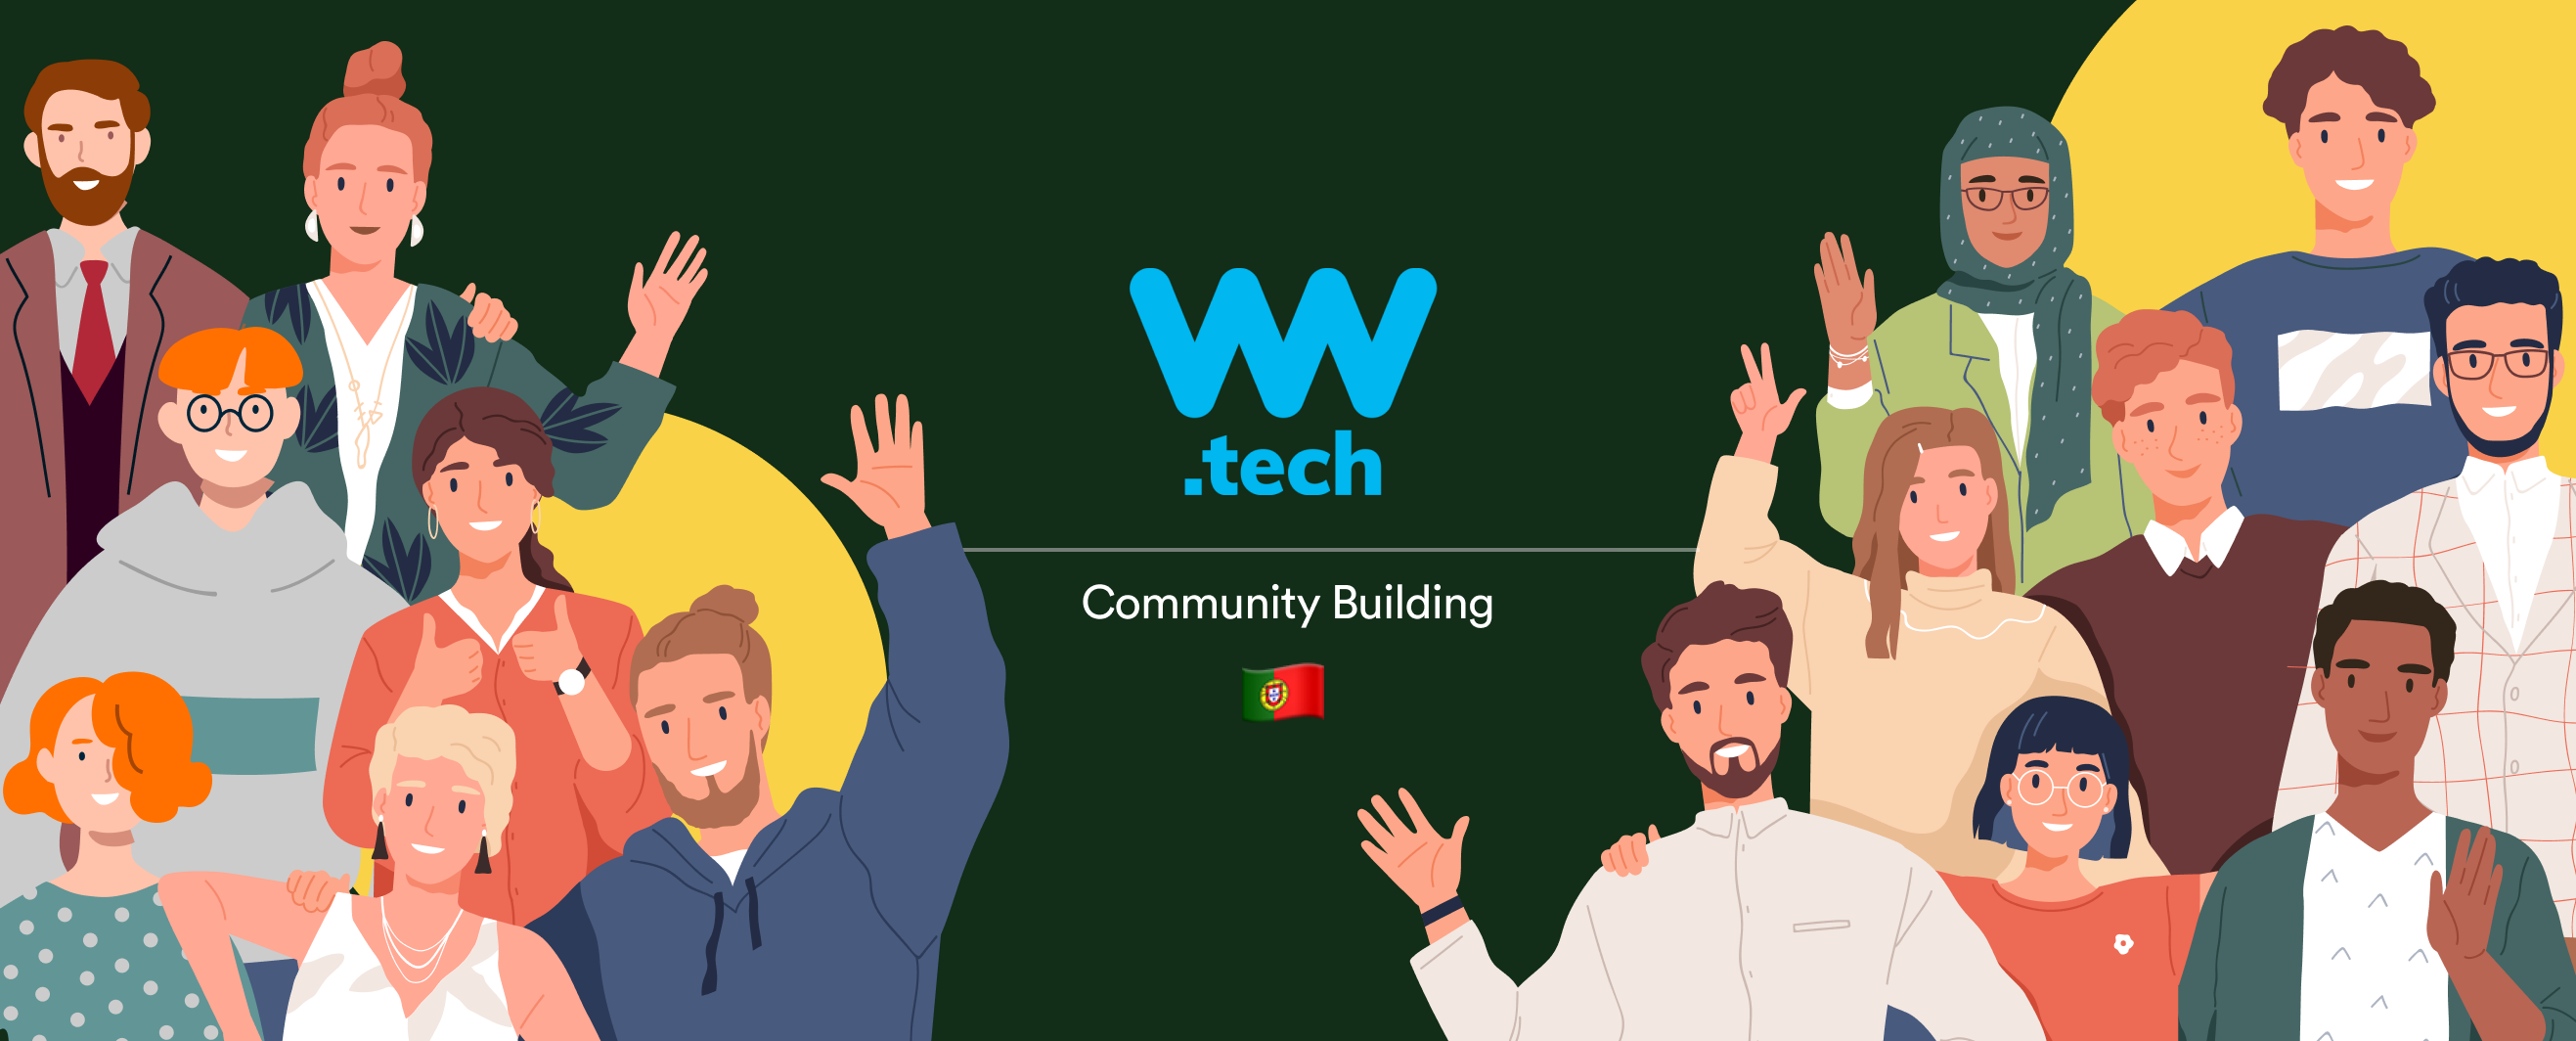 ‘Matosinhos.tech’ a budding tech community, charts its growth journey using Airmeet